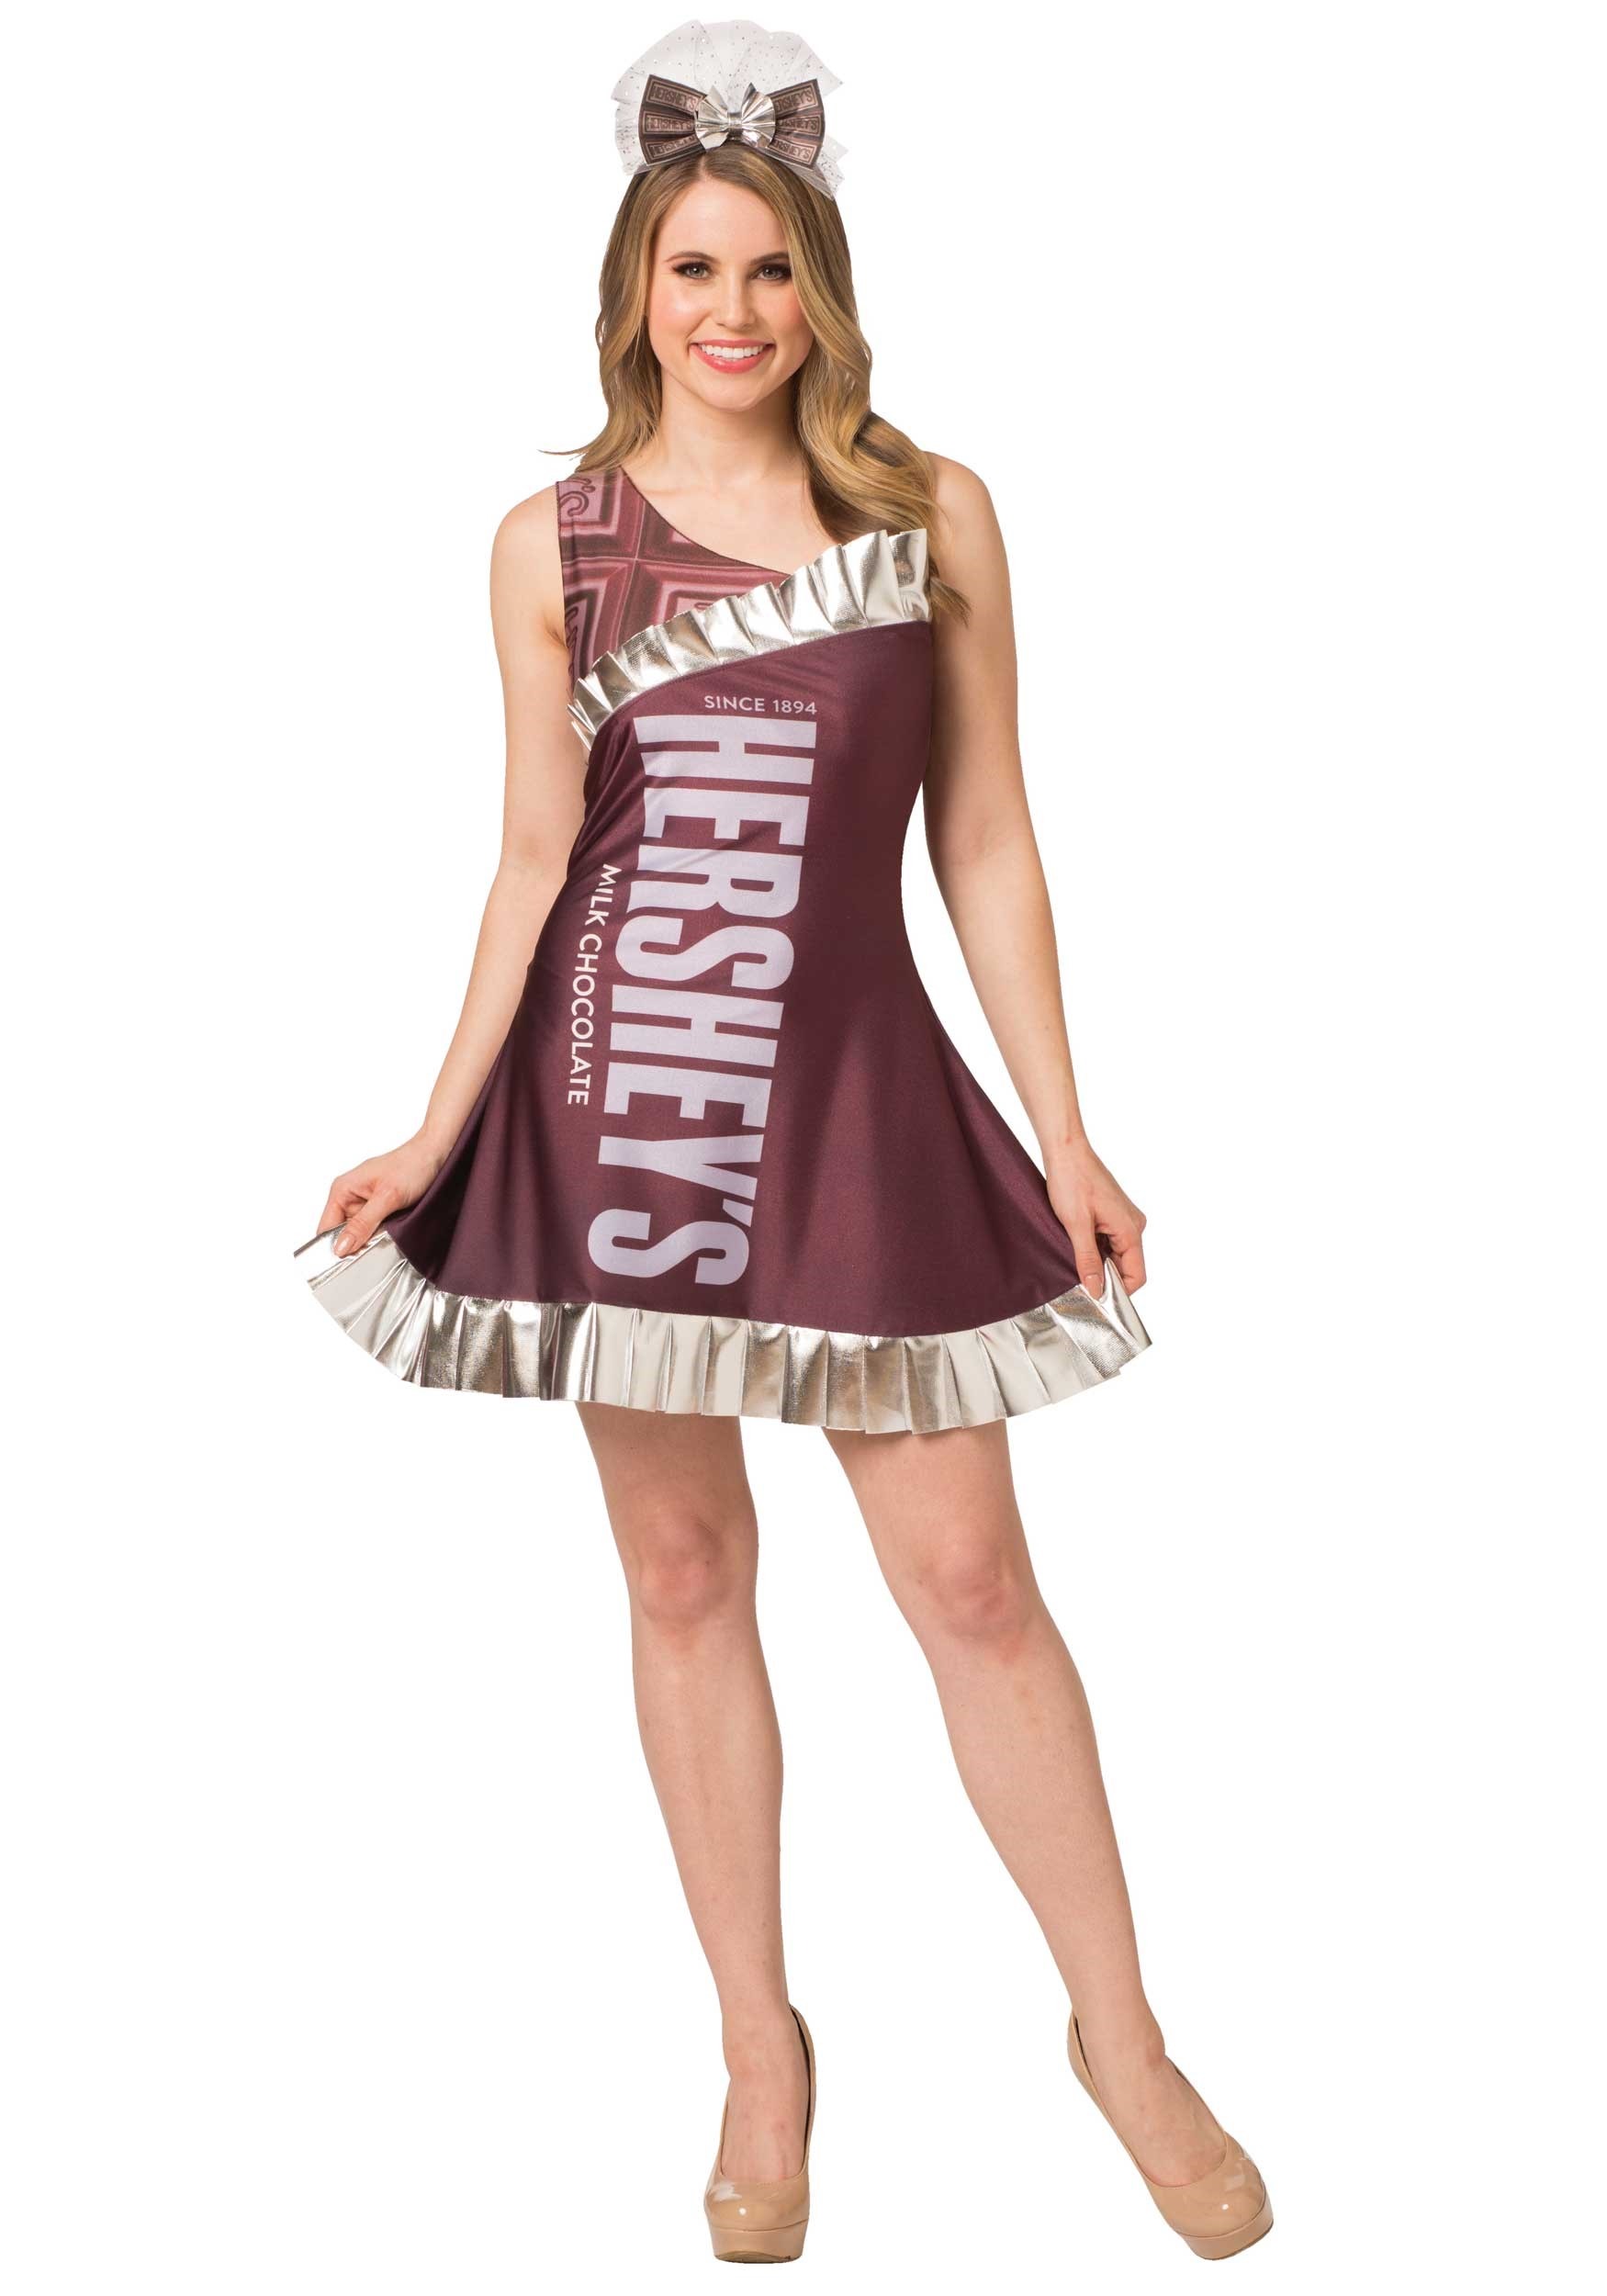 Hersheys Candy Bar Costume for Women